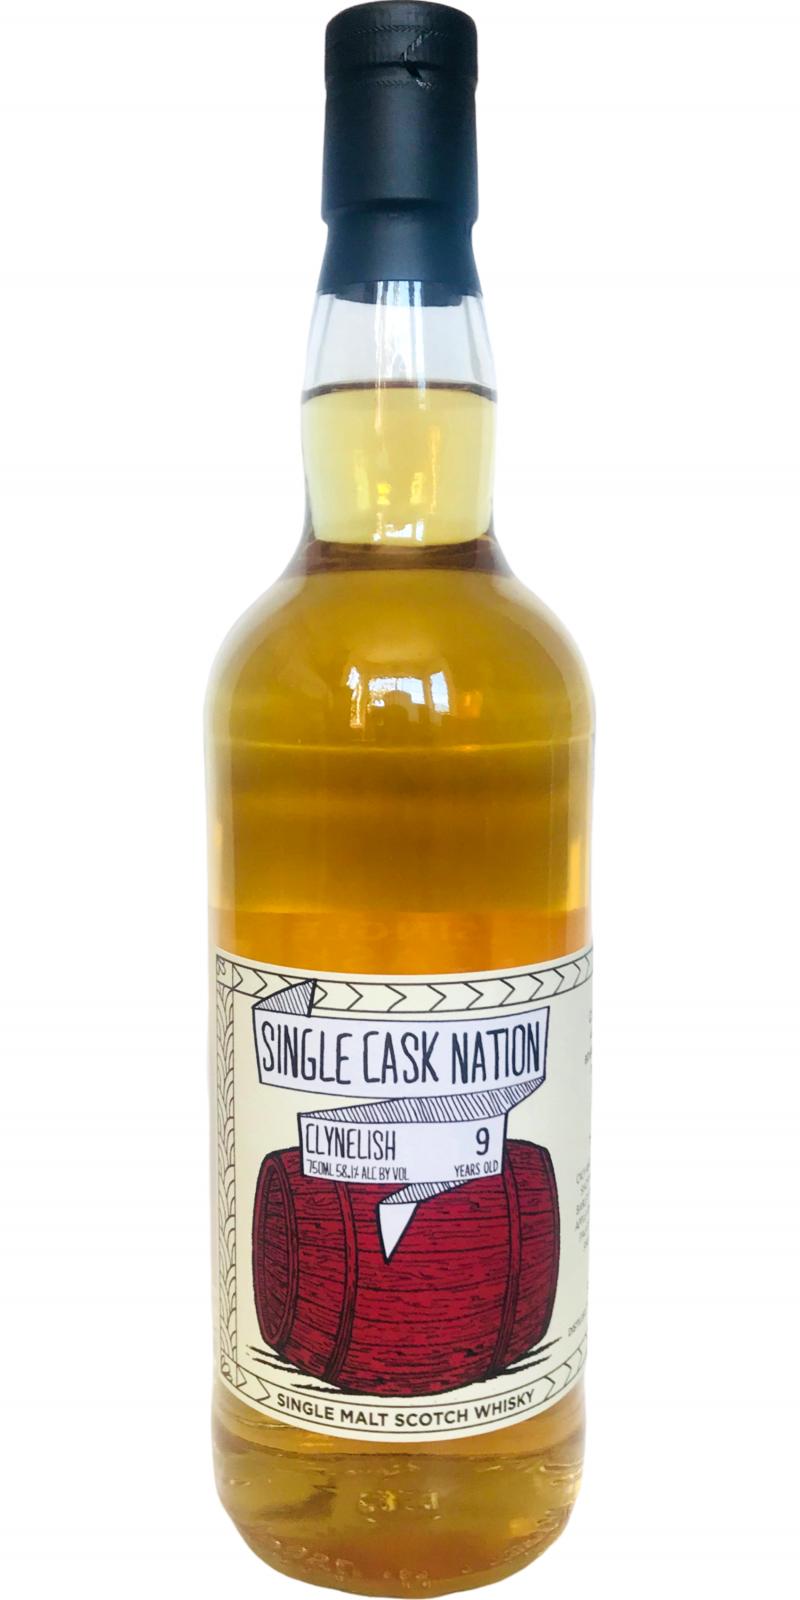 Clynelish 2010 JWC Single Cask Nation 1nd Fill Bourbon Barrel #700038 58.1% 750ml